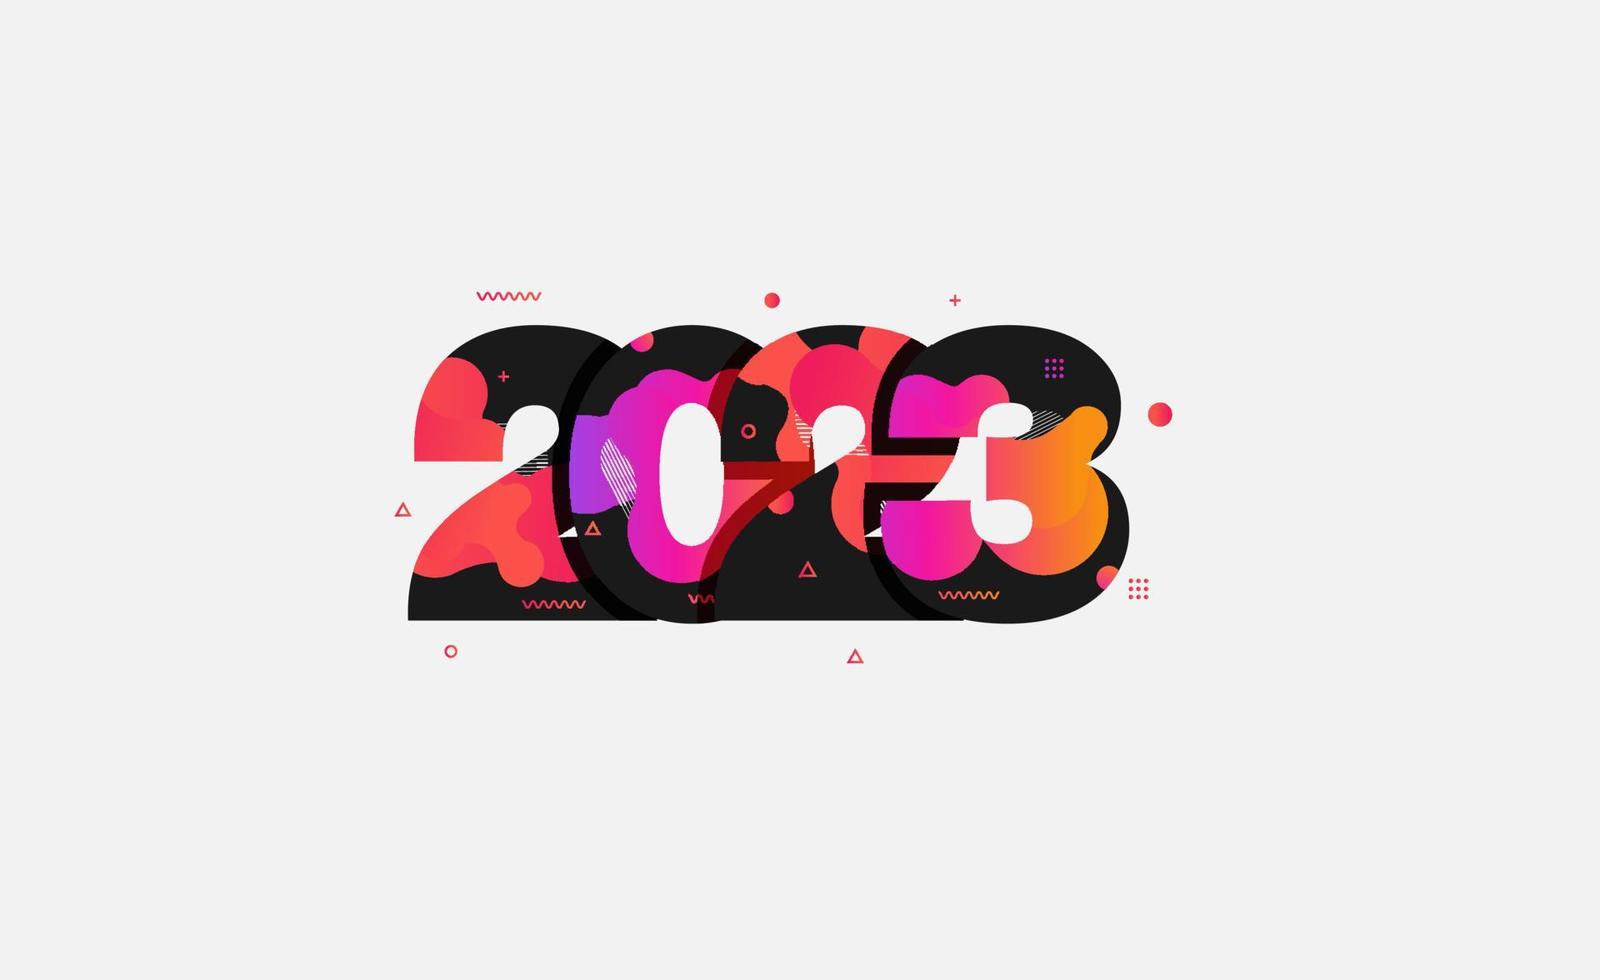 abstrakt flytande former design med siffra 2023 Lycklig ny år modern grafisk element, vektor illustration mall